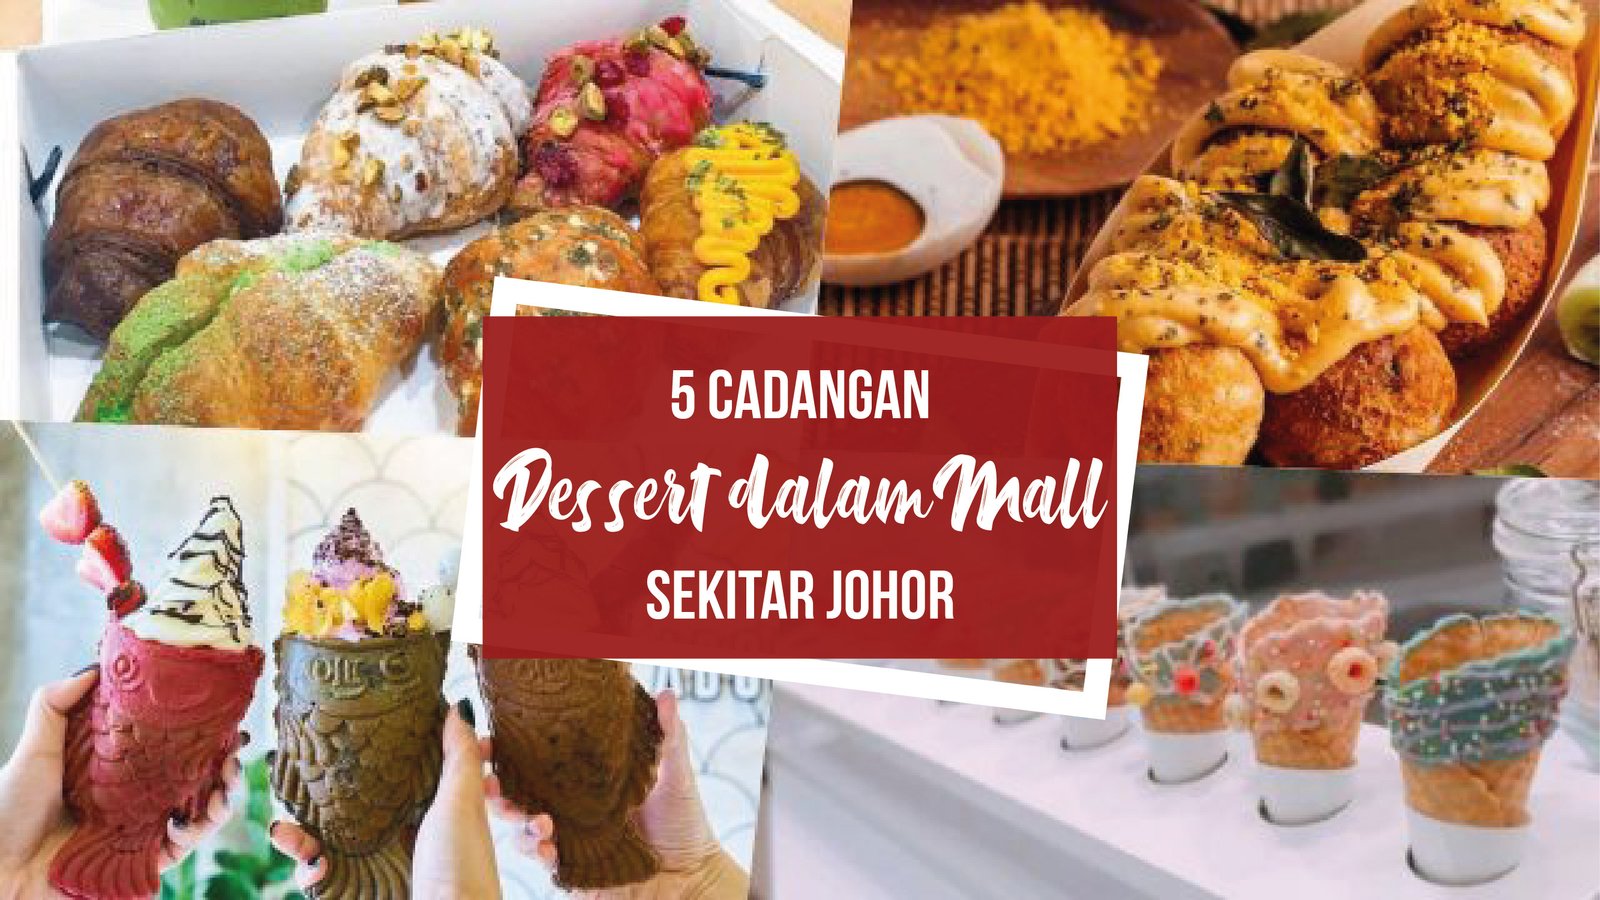 5 cadangan Dessert Mall sekitar Johor